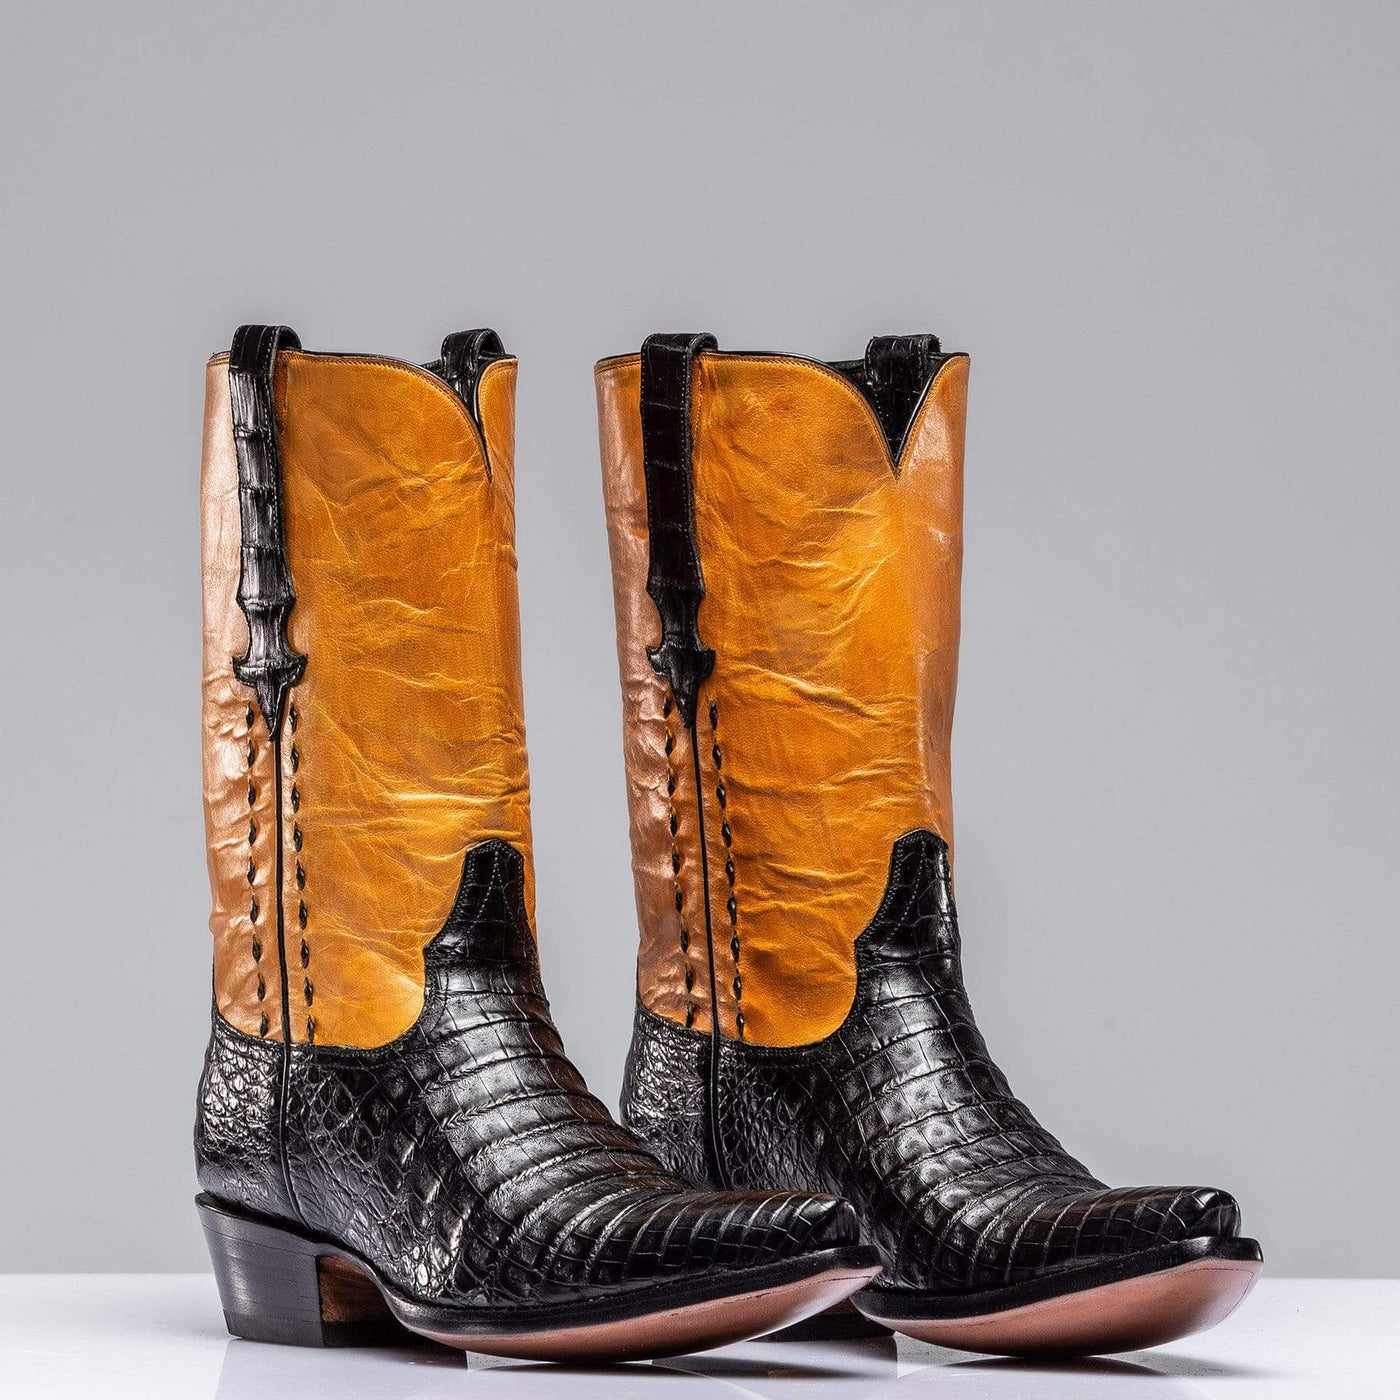 Matagorda Caiman Boots - AXEL'S